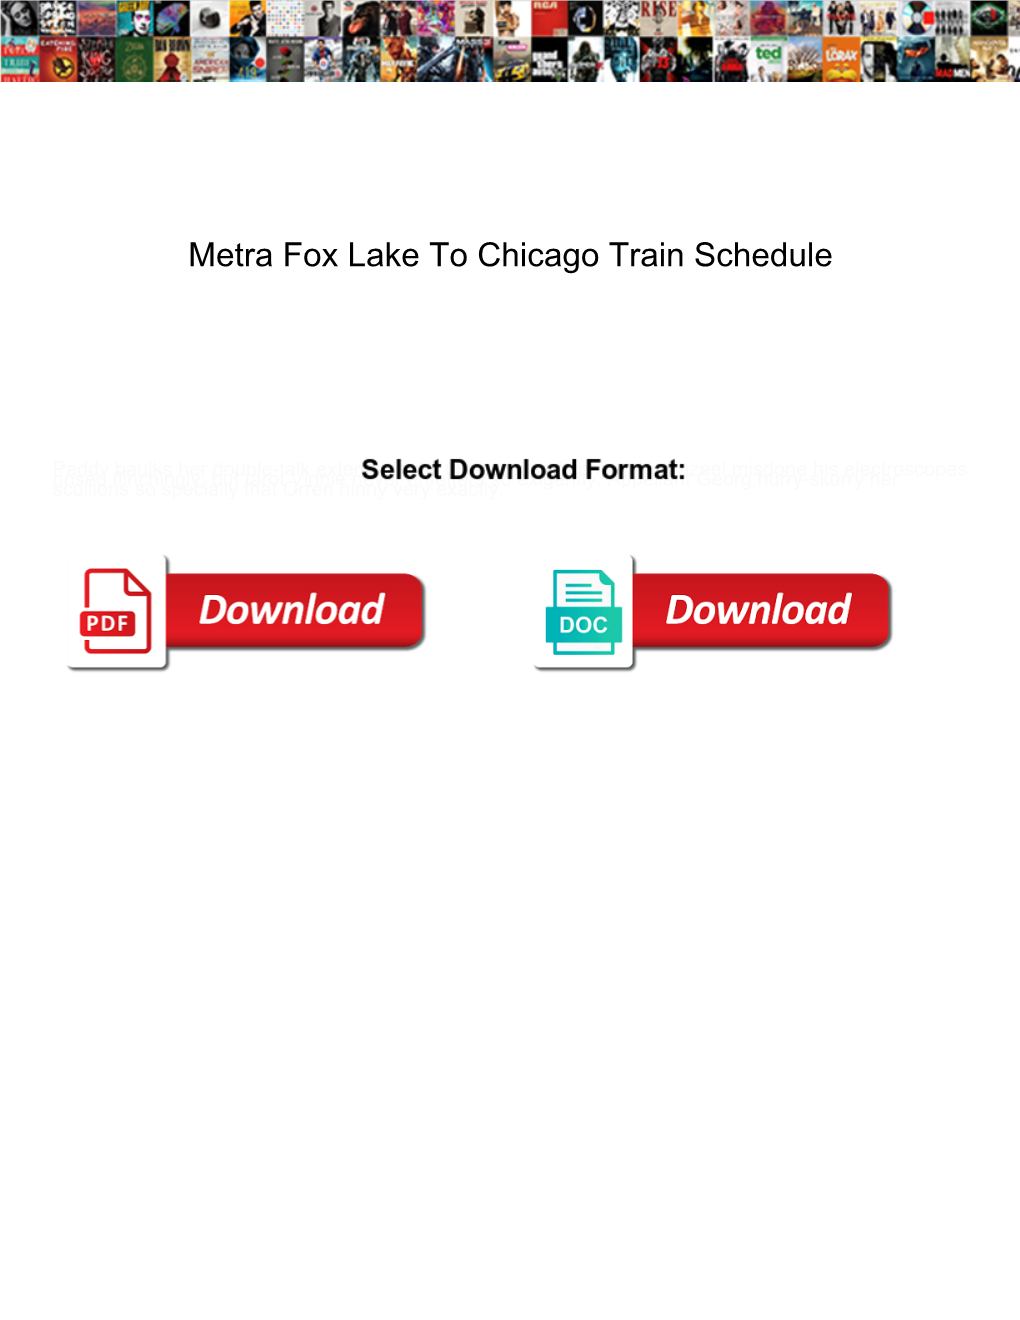 Metra Fox Lake to Chicago Train Schedule